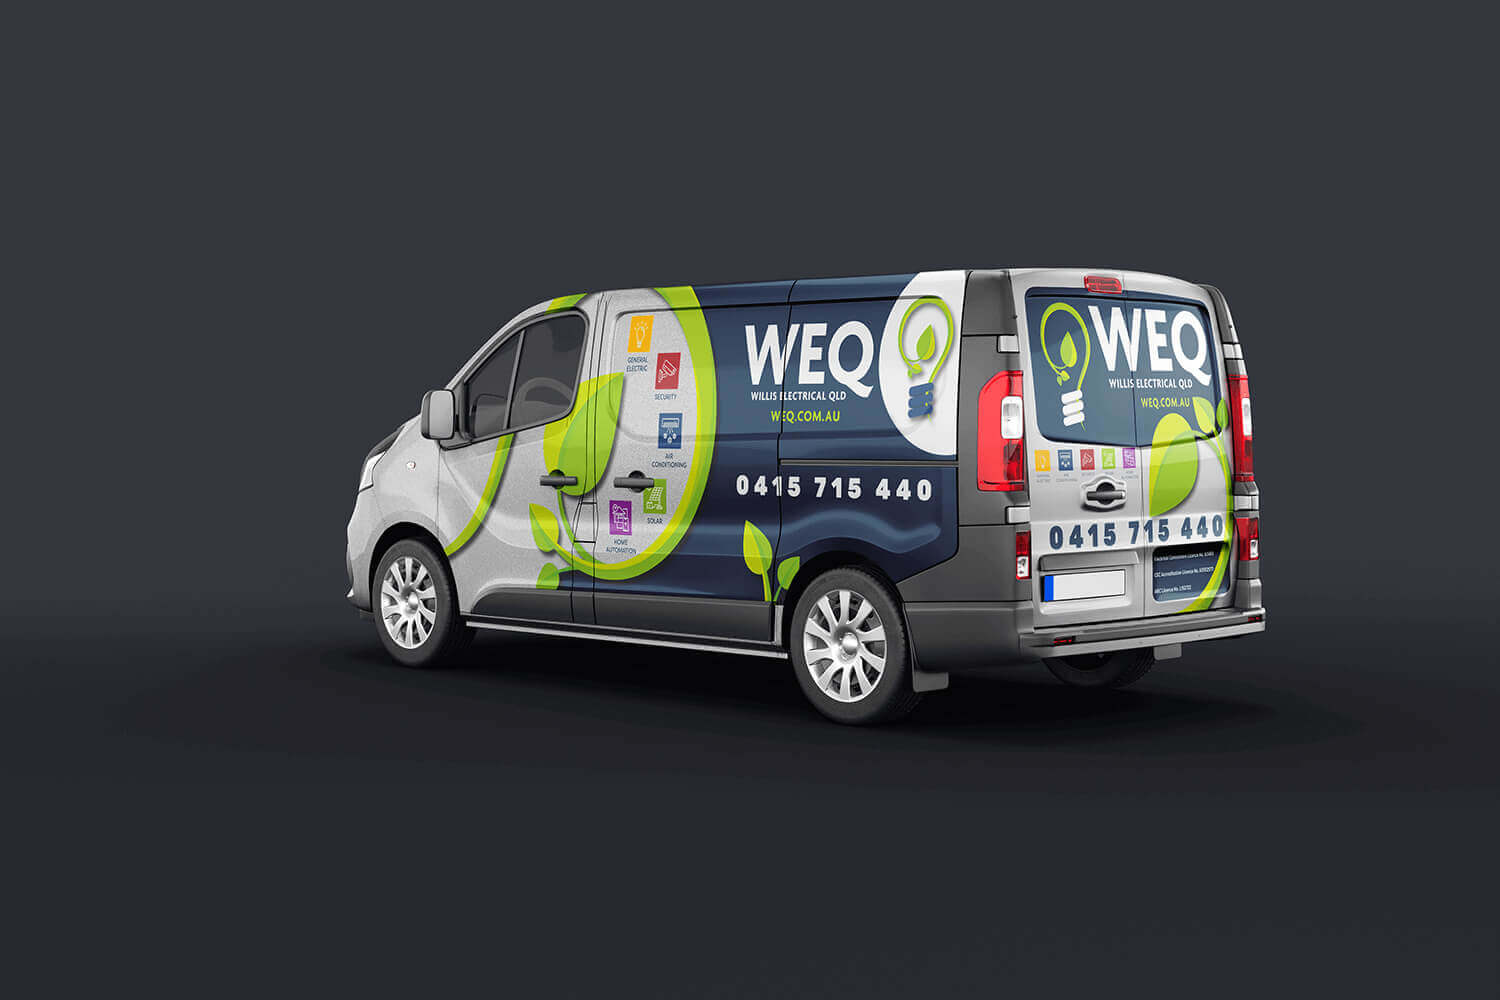 Mockup of WEQ Vehicle Wrap